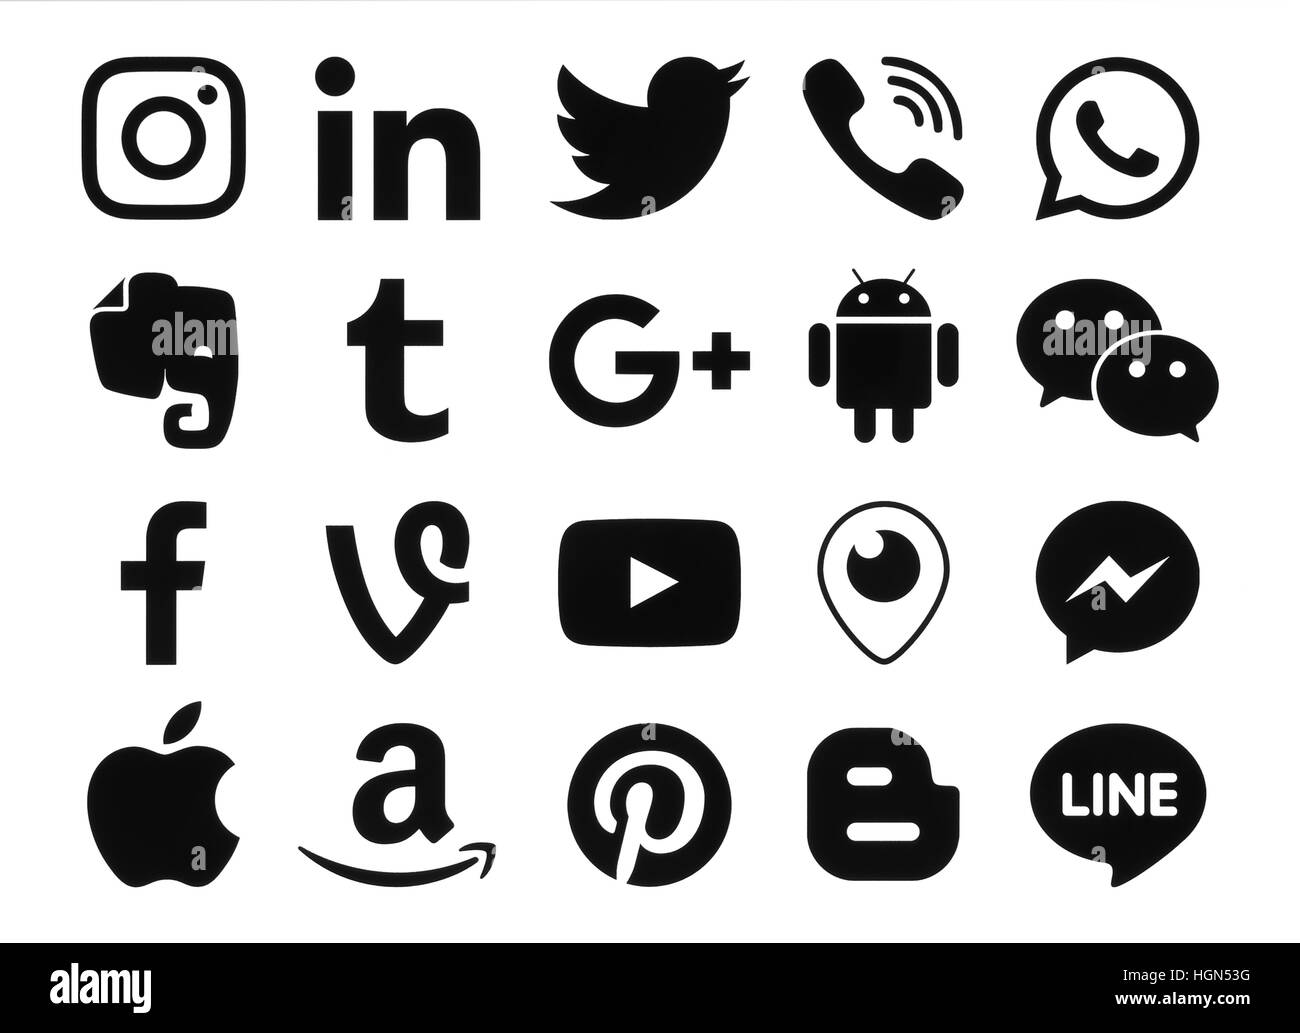 Youtube logo Black and White Stock Photos & Images - Alamy